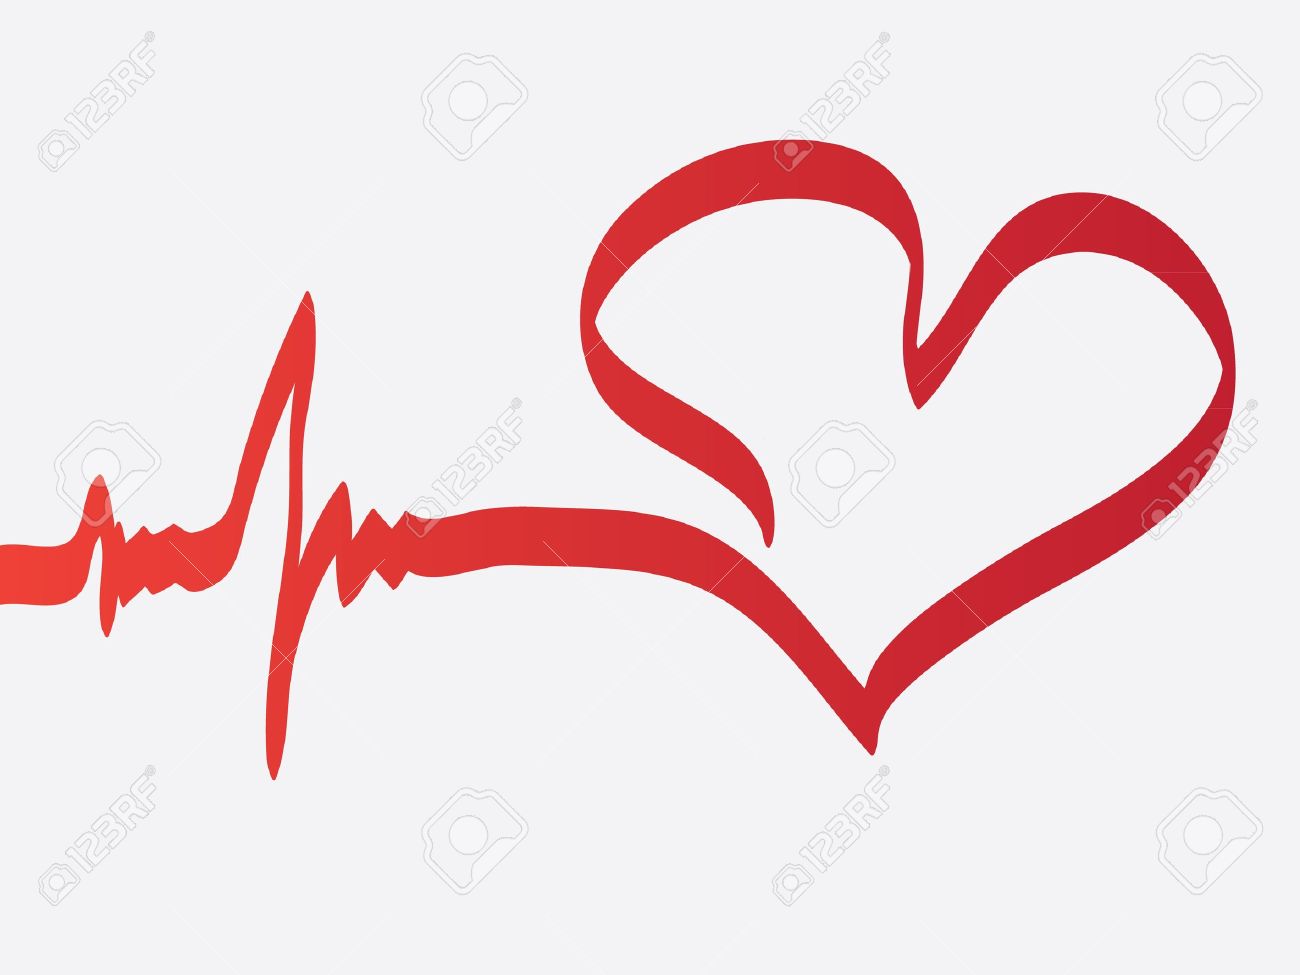 heartbeat: Heart beats